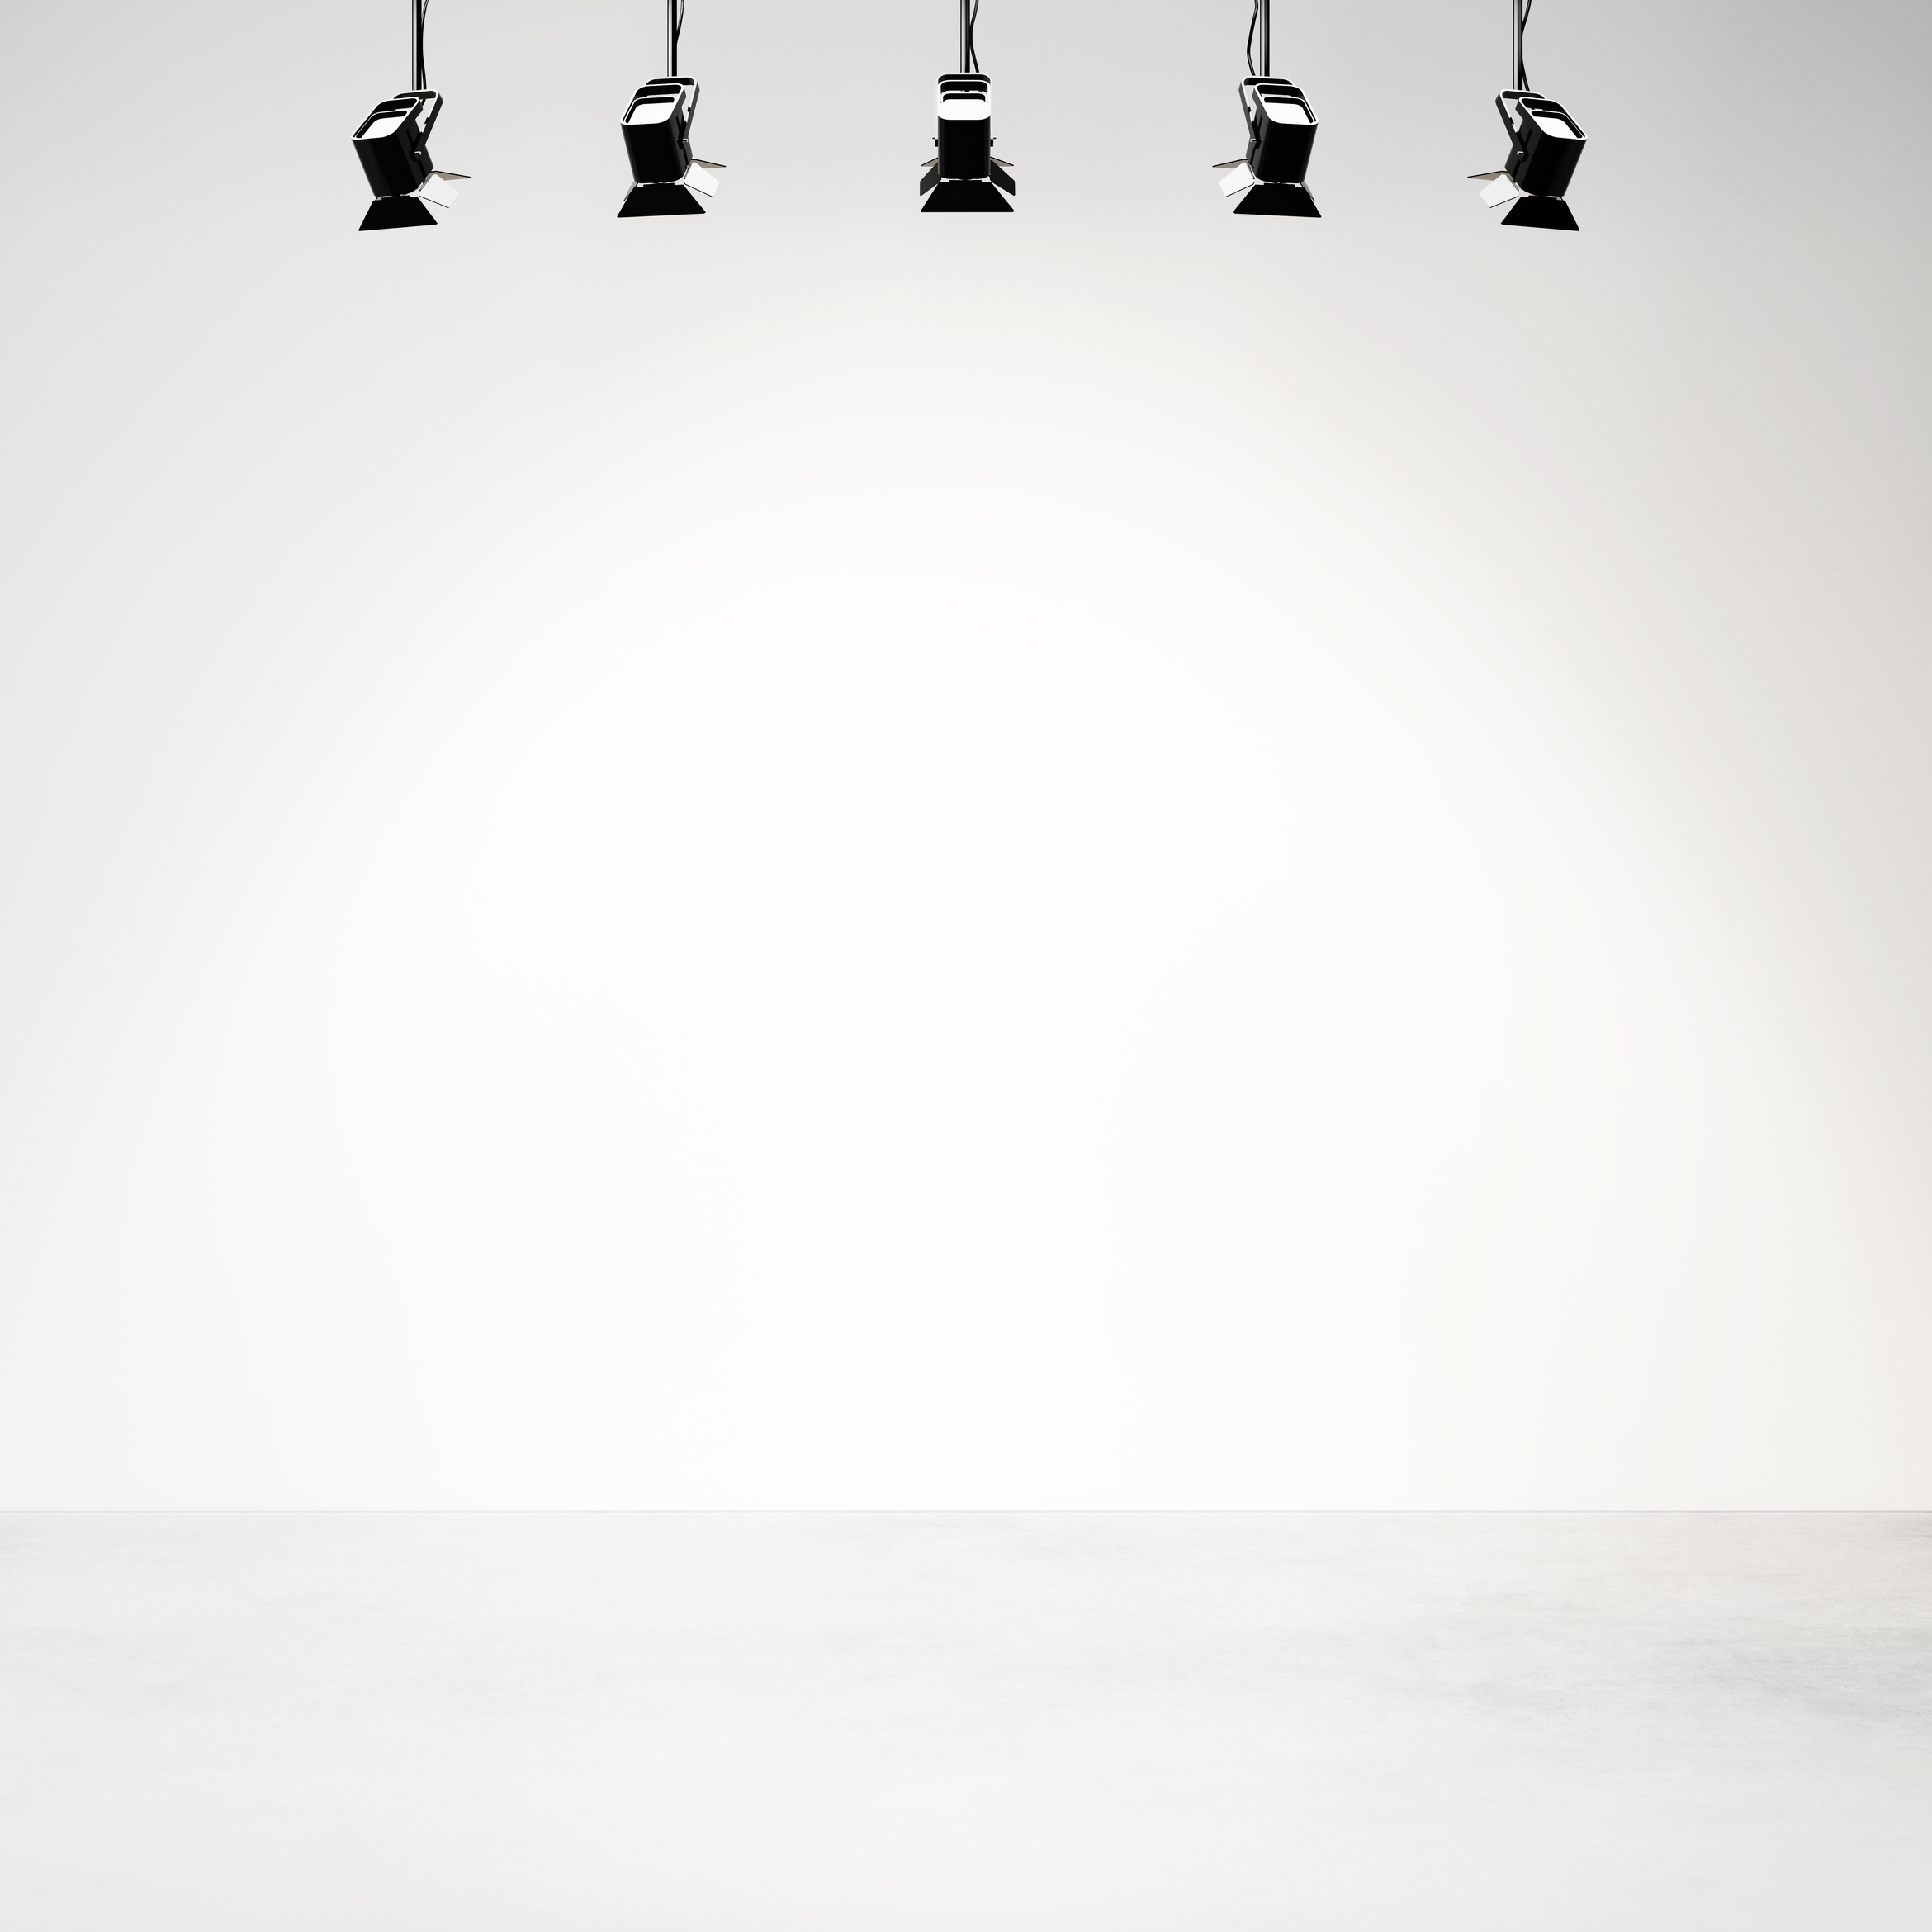 White studio background with spotlights